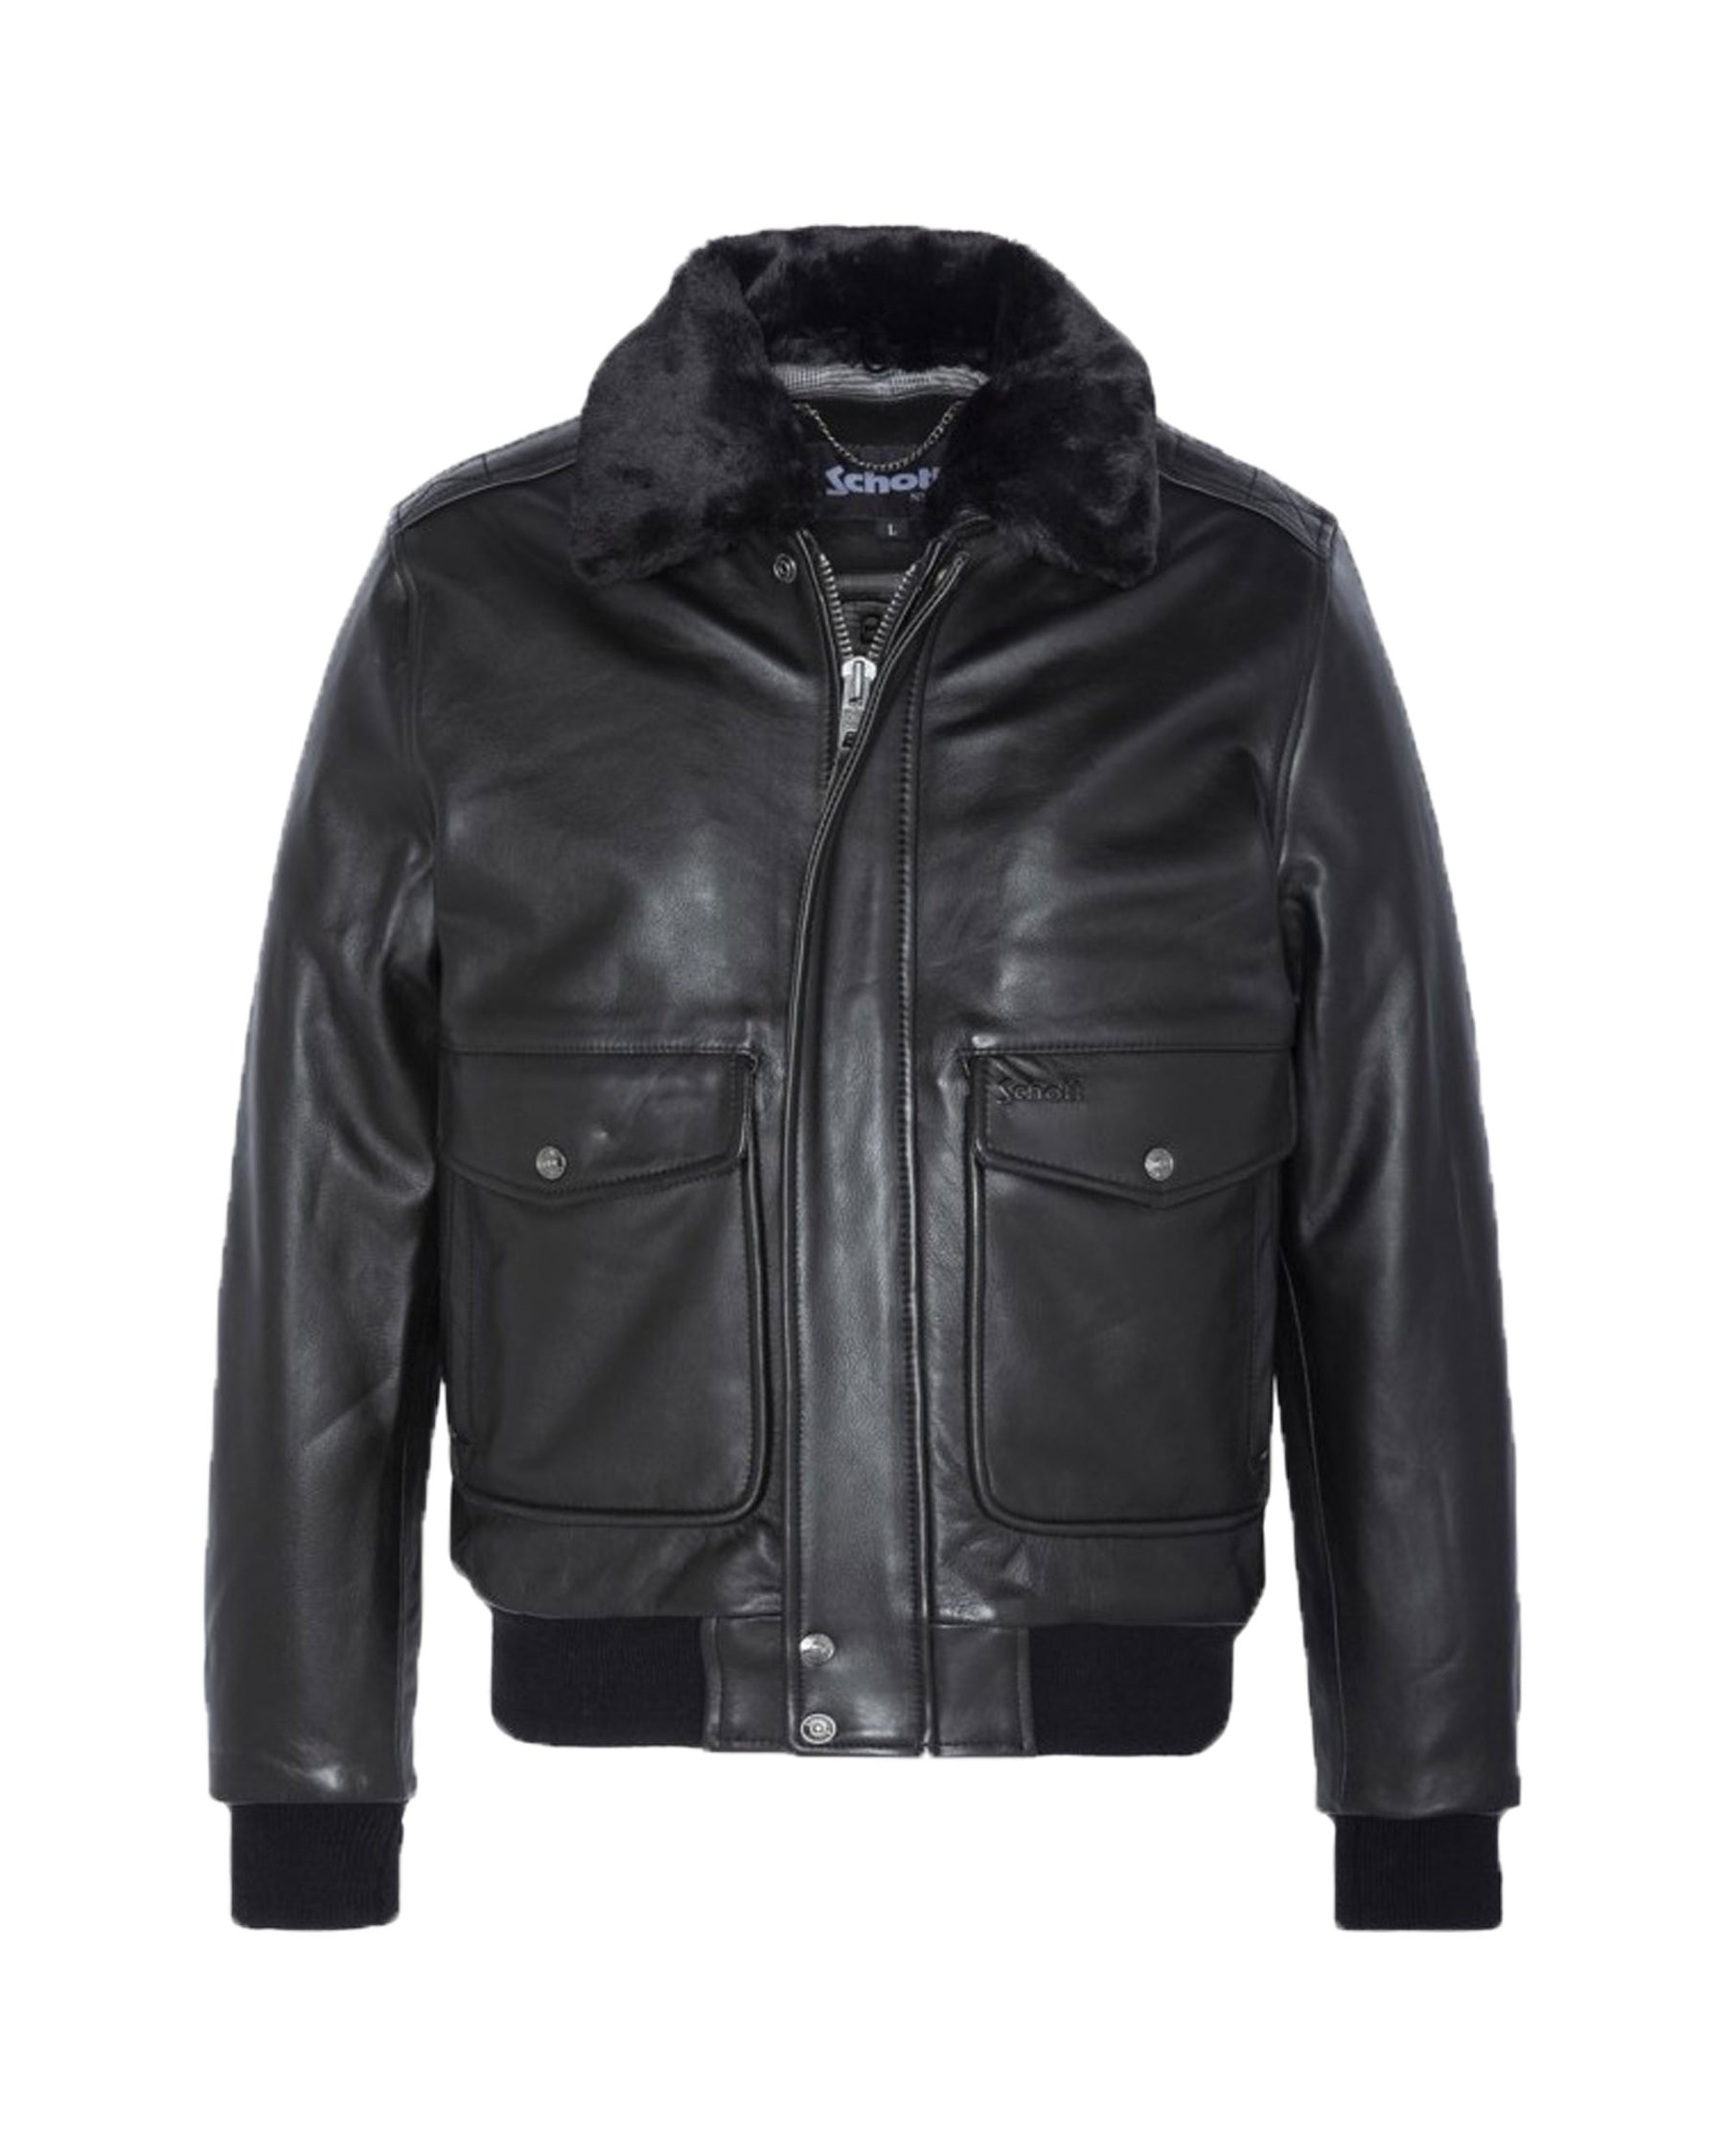 Man Jacket Schott Nyc Leather Black Pilot